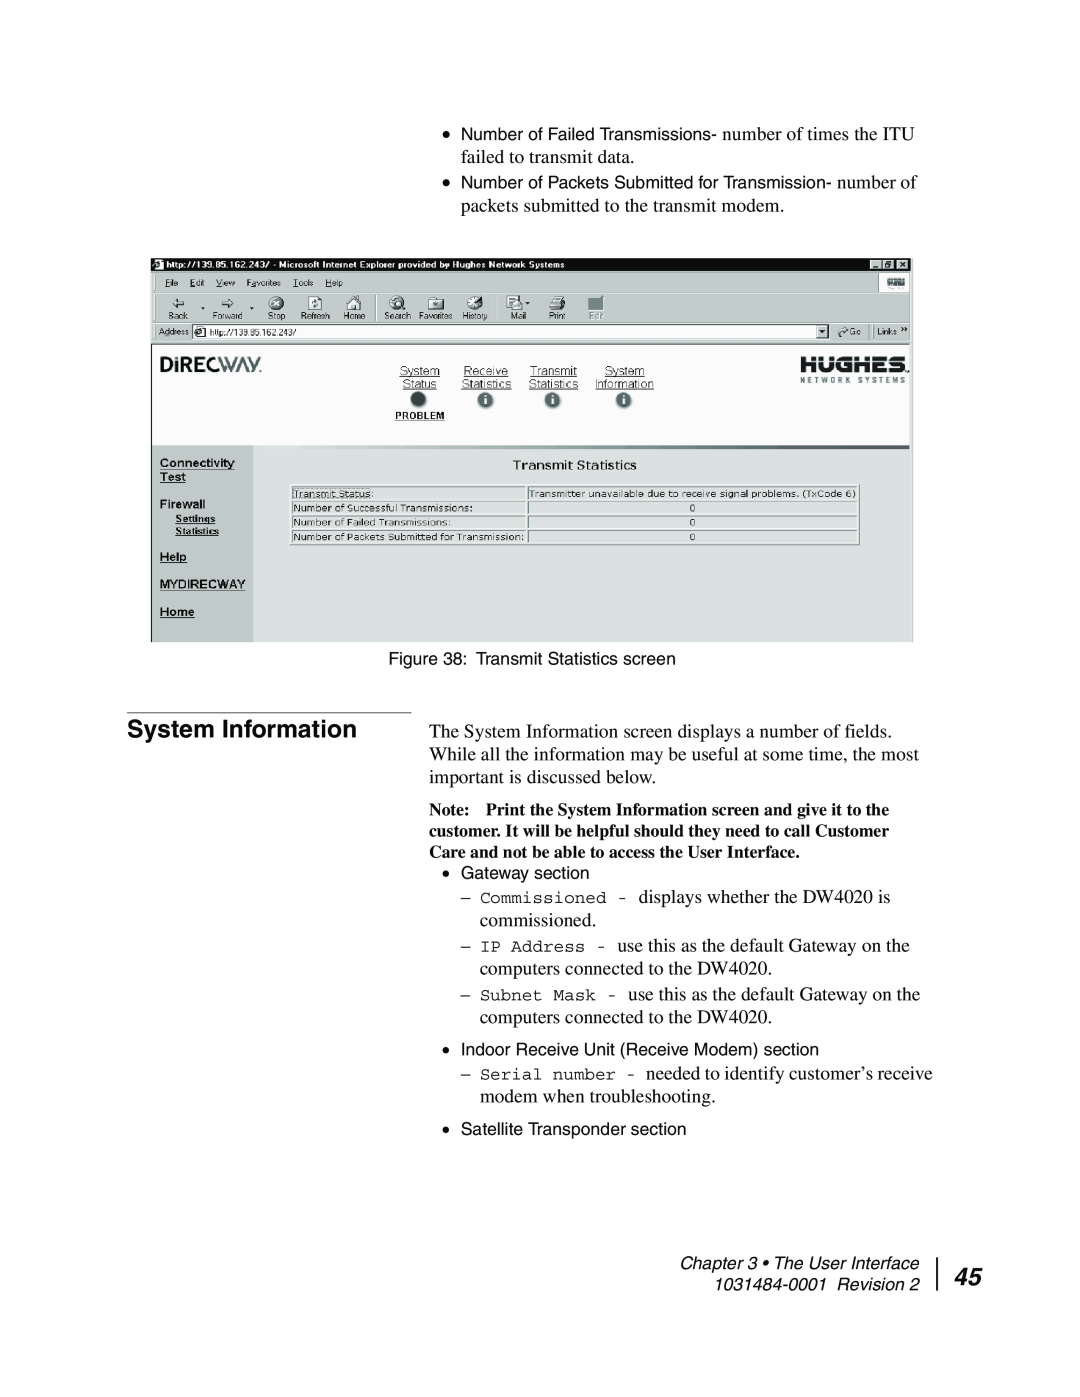 Hughes DW4020 manual System Information 